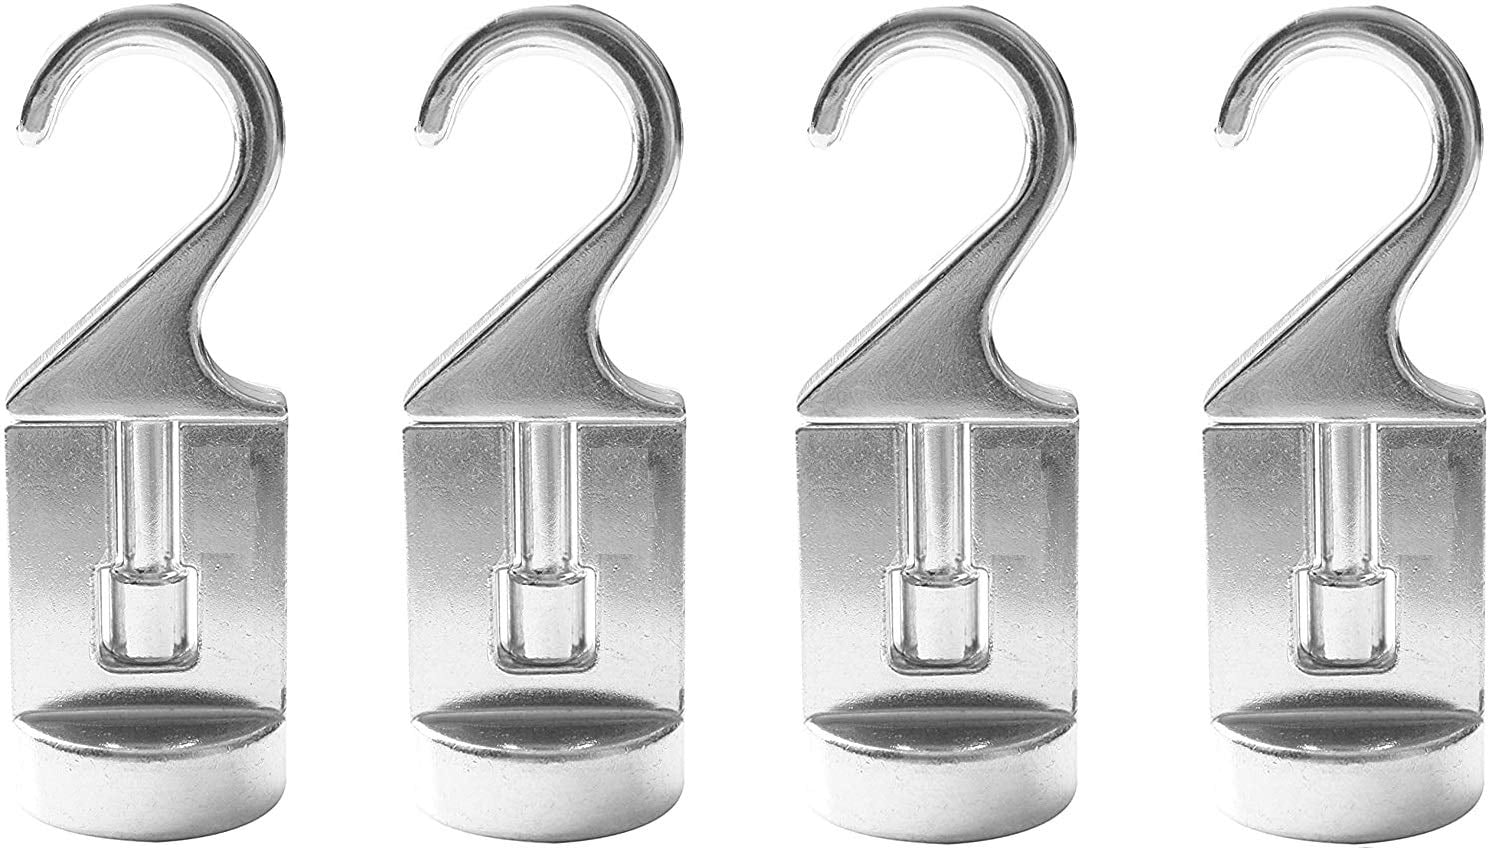 1 Aluminum Pot Rack Hook 41207 Concept Housewares Cooks Standard Taylor style 